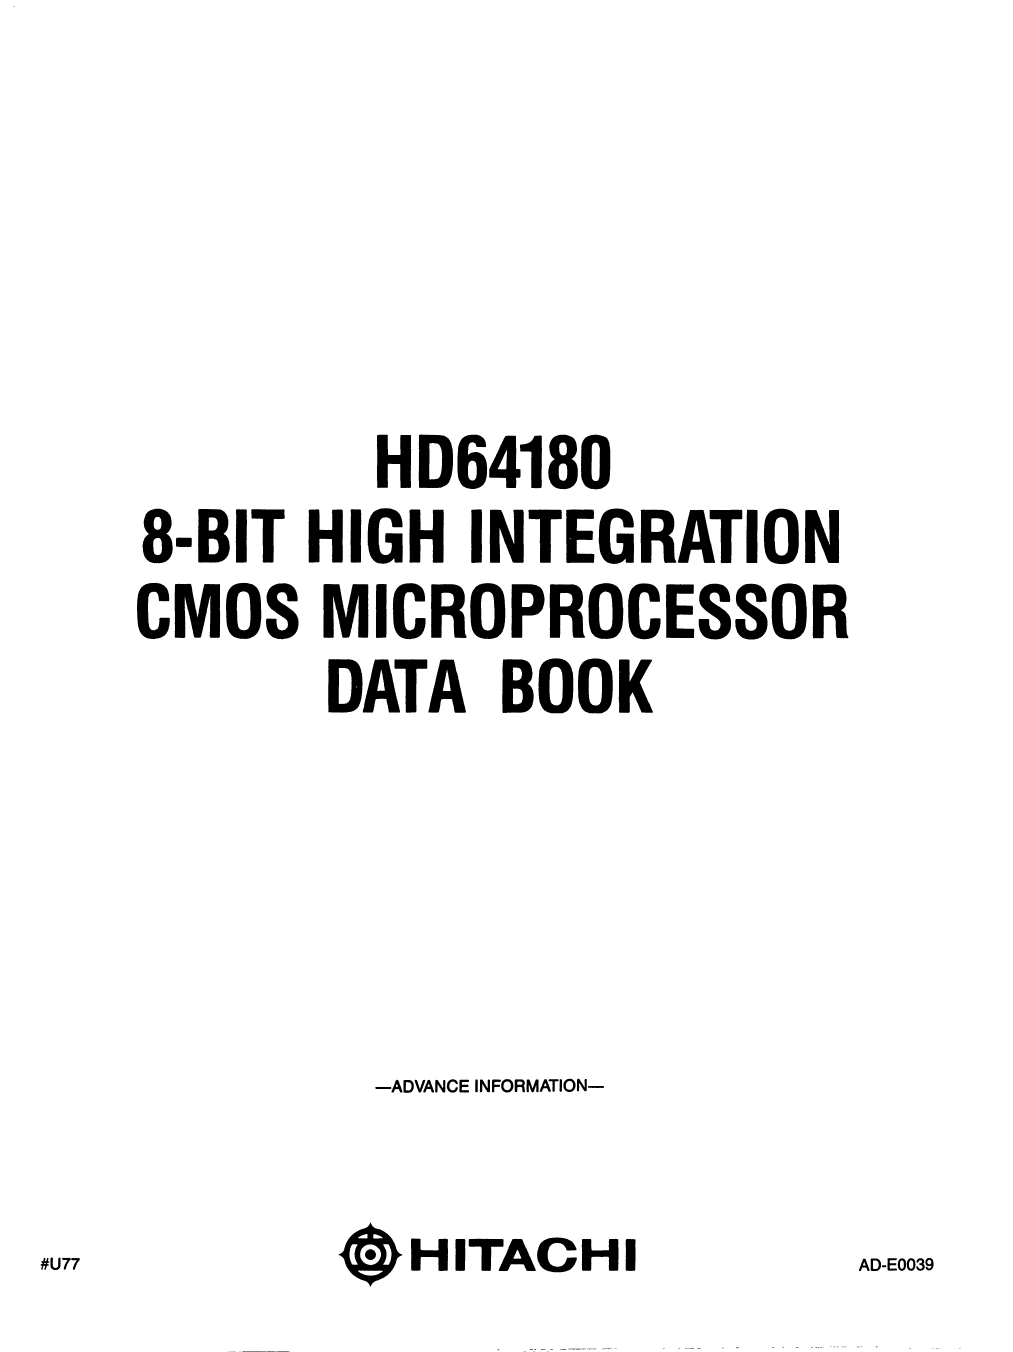 Hd64180 8-bit high integration cmos microprocessor user manual pdf